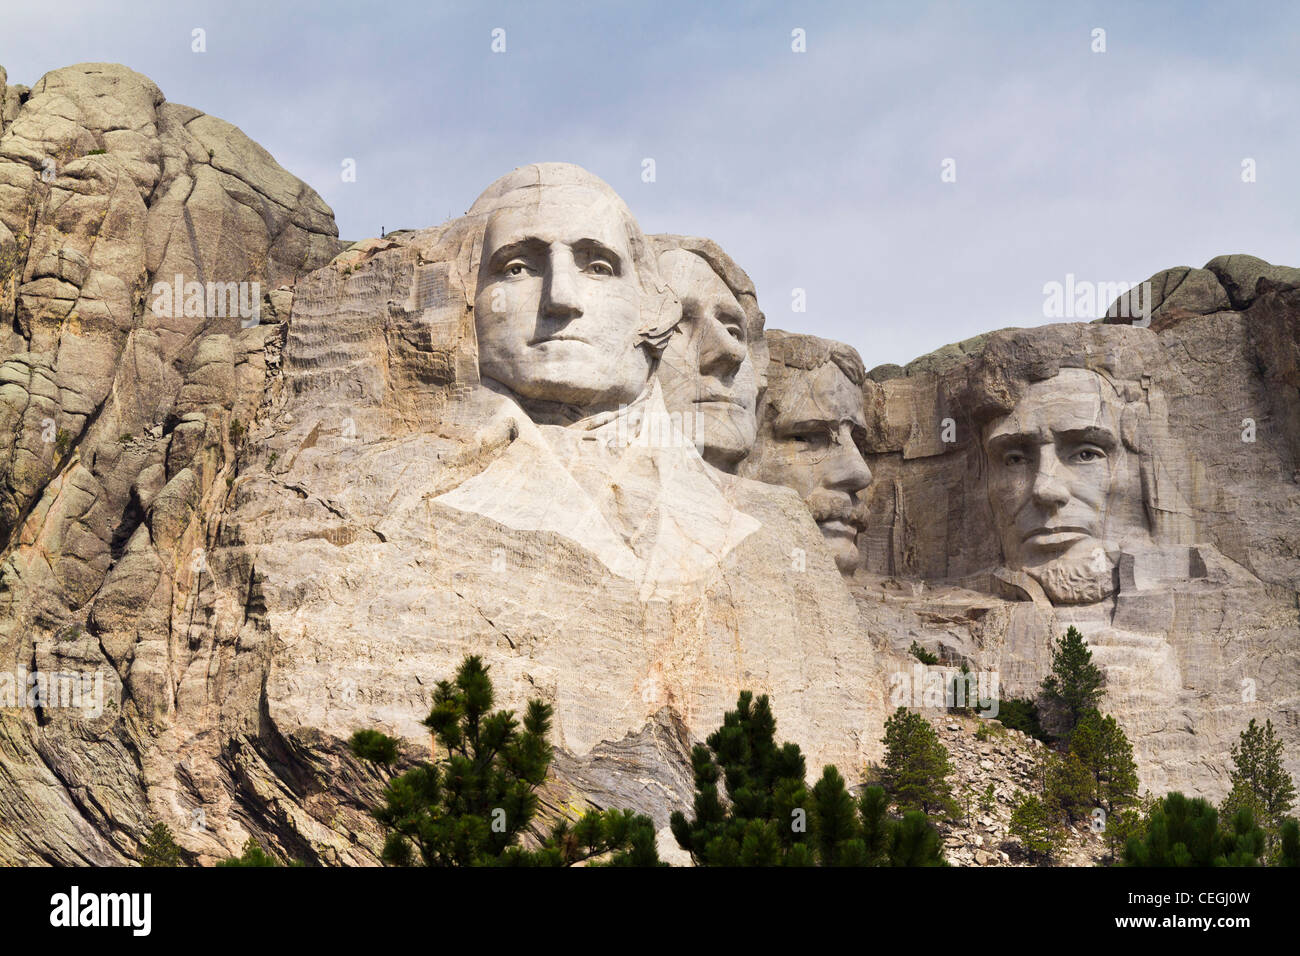 American Mount Rushmore president Memorial  National Park of South Dakota in USA Stock Photo